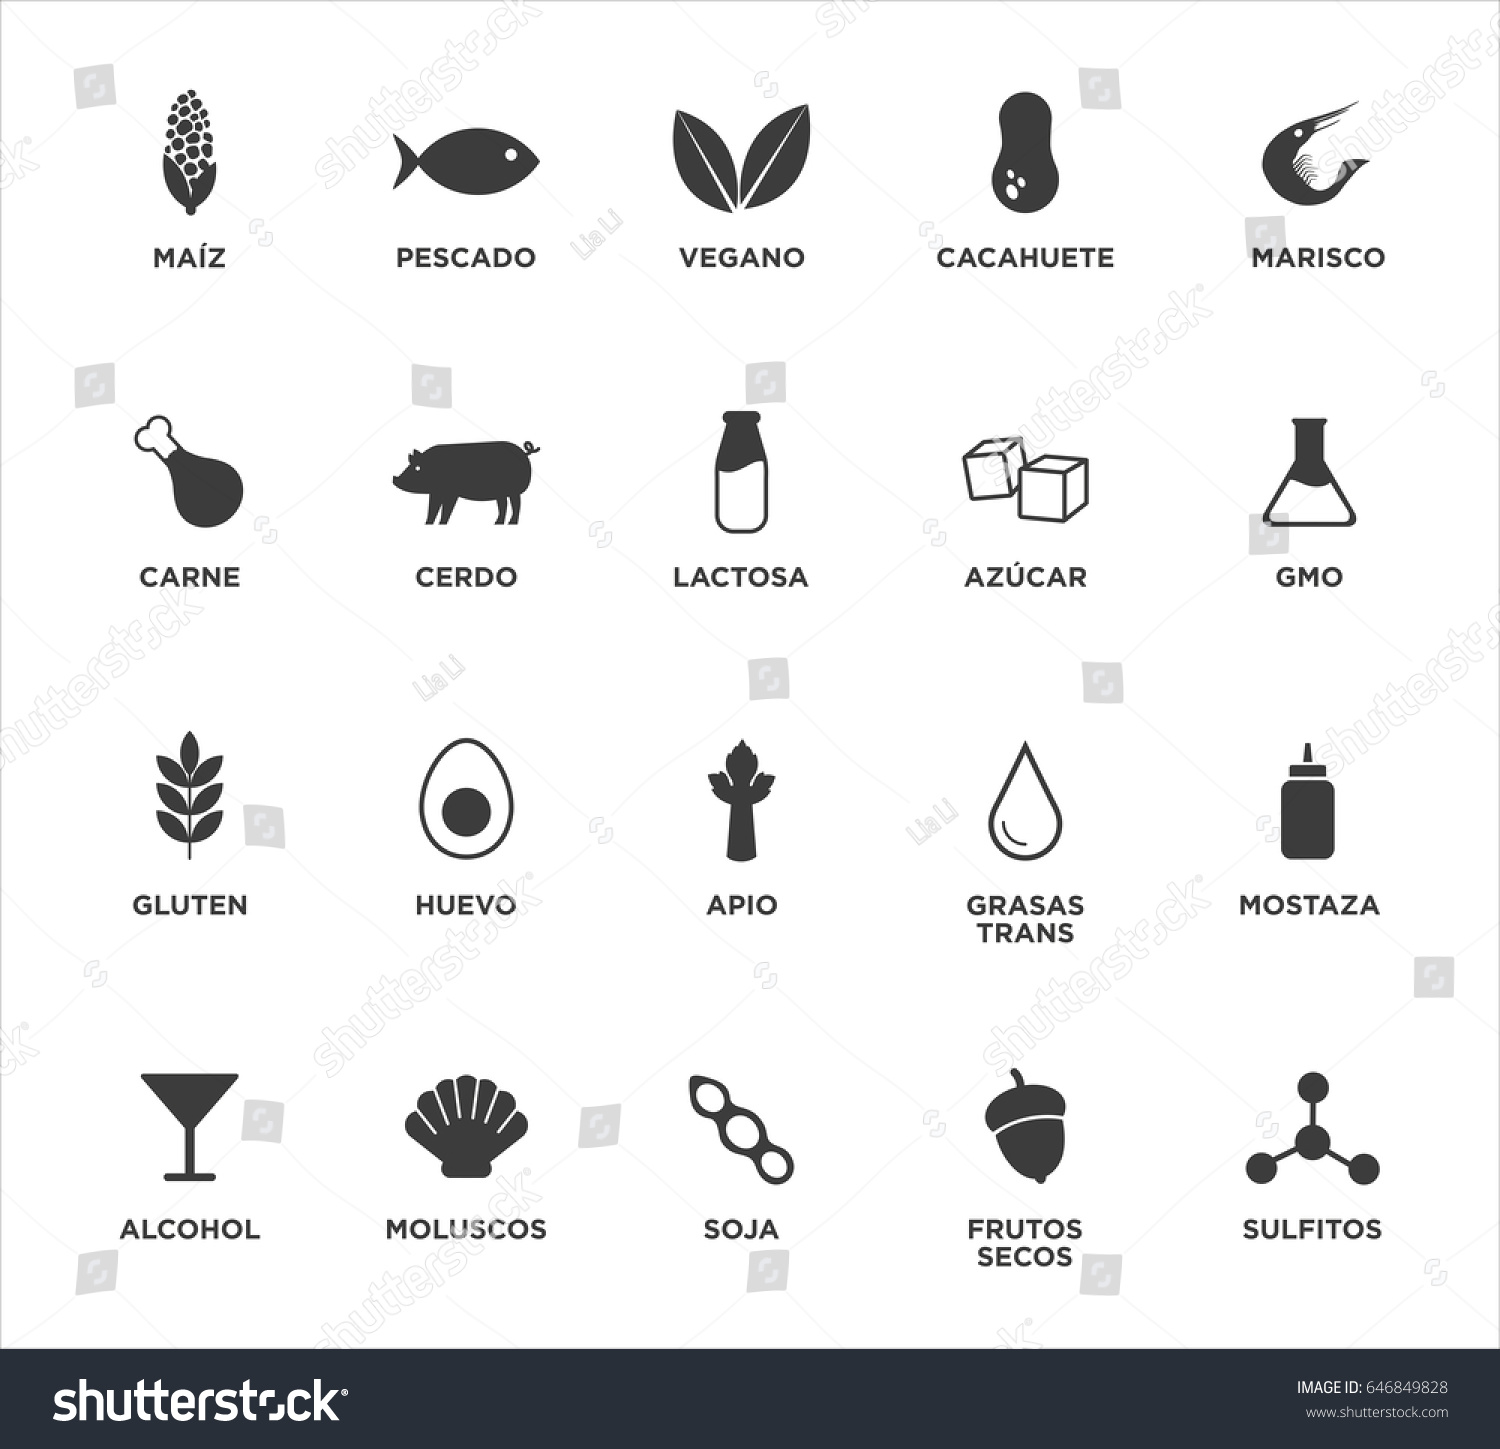 SVG of Allergen icons set. Written in Spanish. Black and white. Vector illustration.
 svg